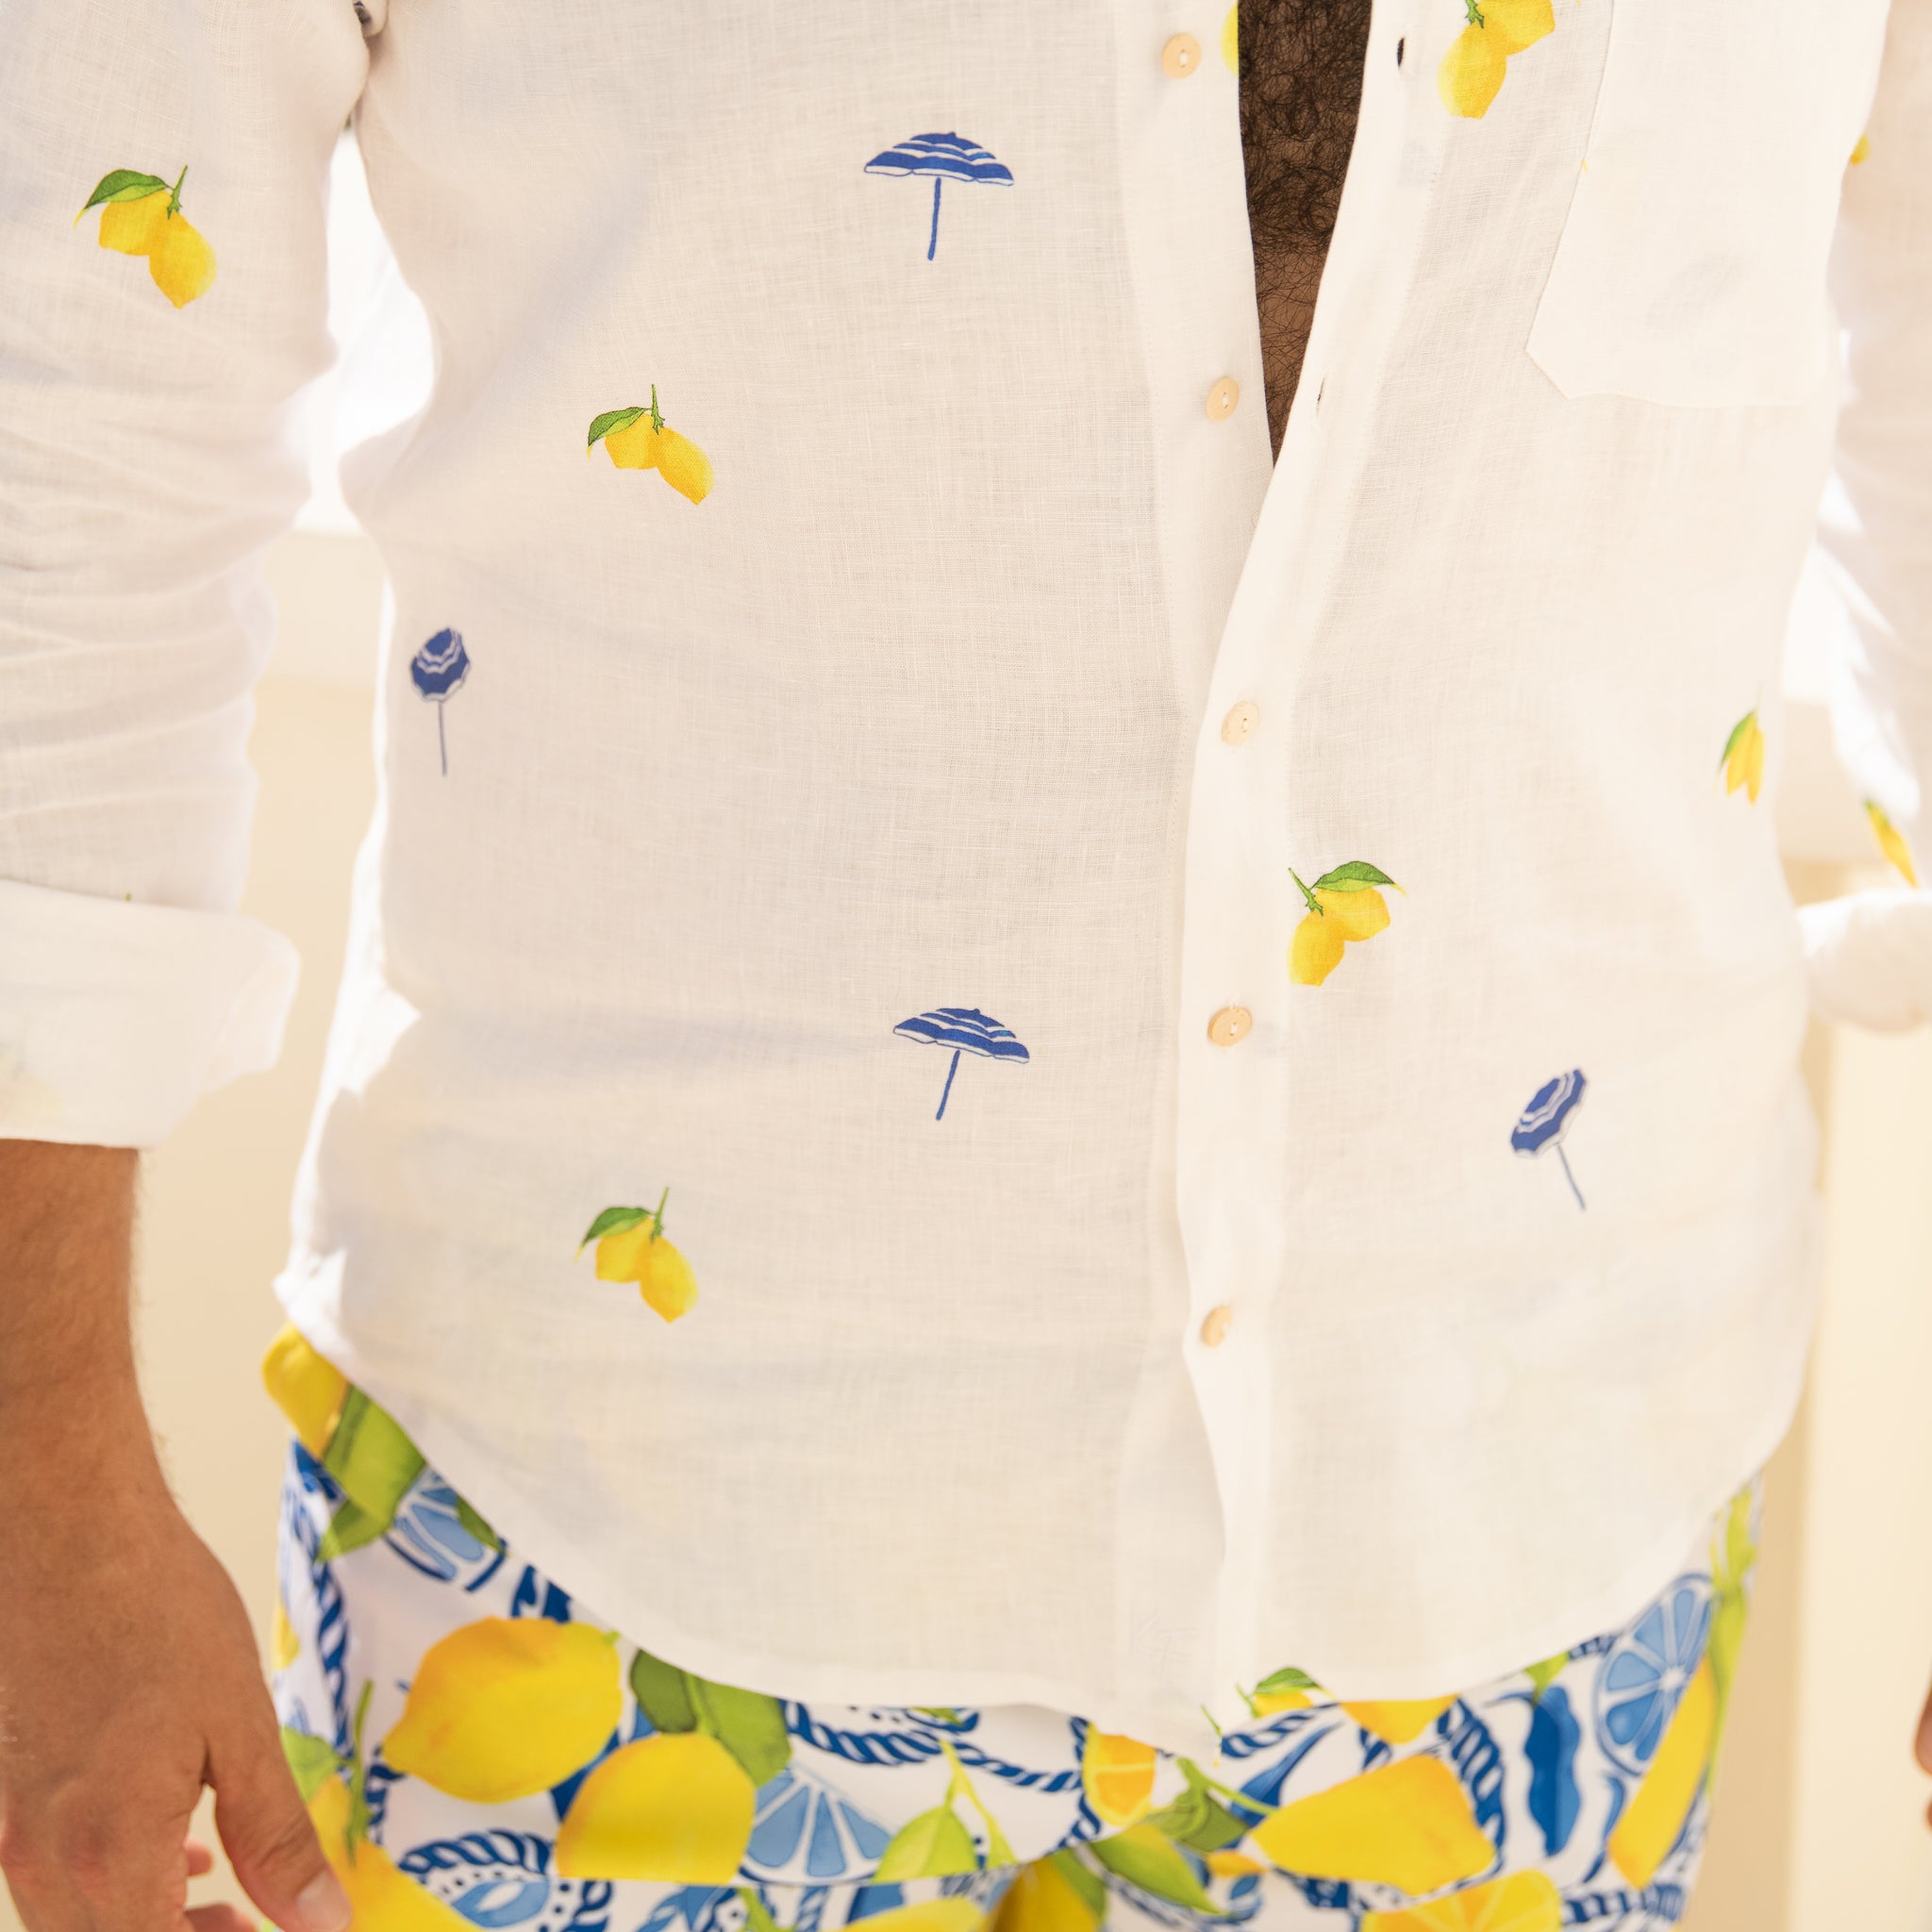 Mens long sleeve 100% white linen button down shirt, lemons and fontelina umbrellas